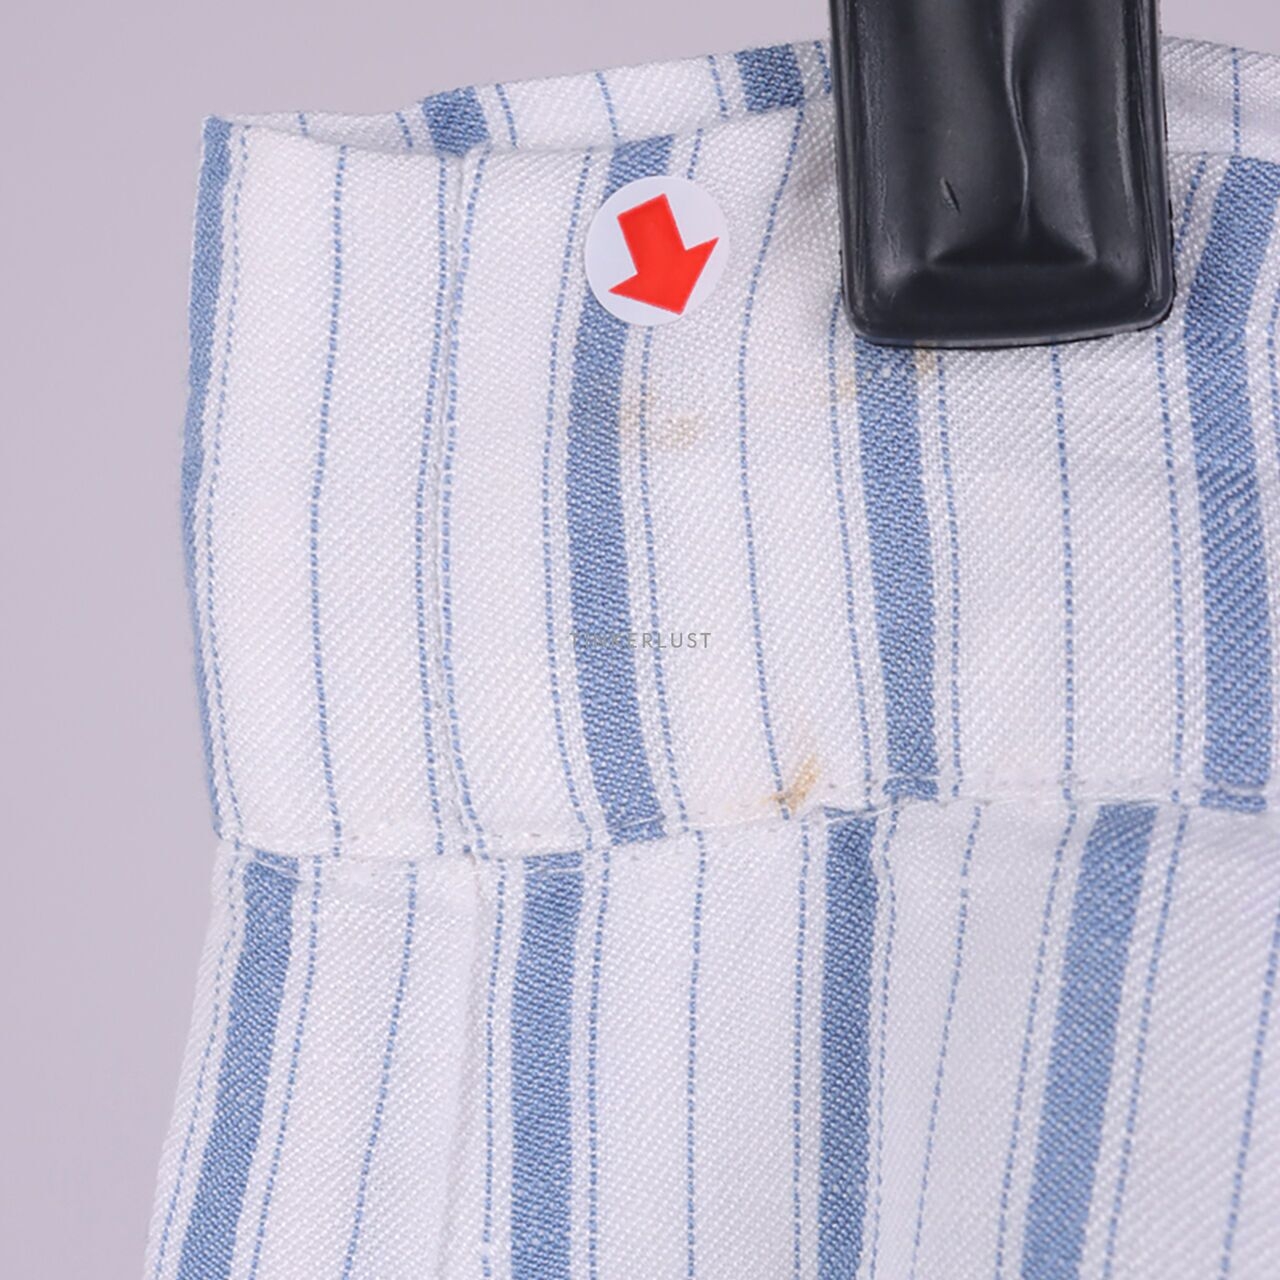 Oudre Blue & White Stripes Short Pants